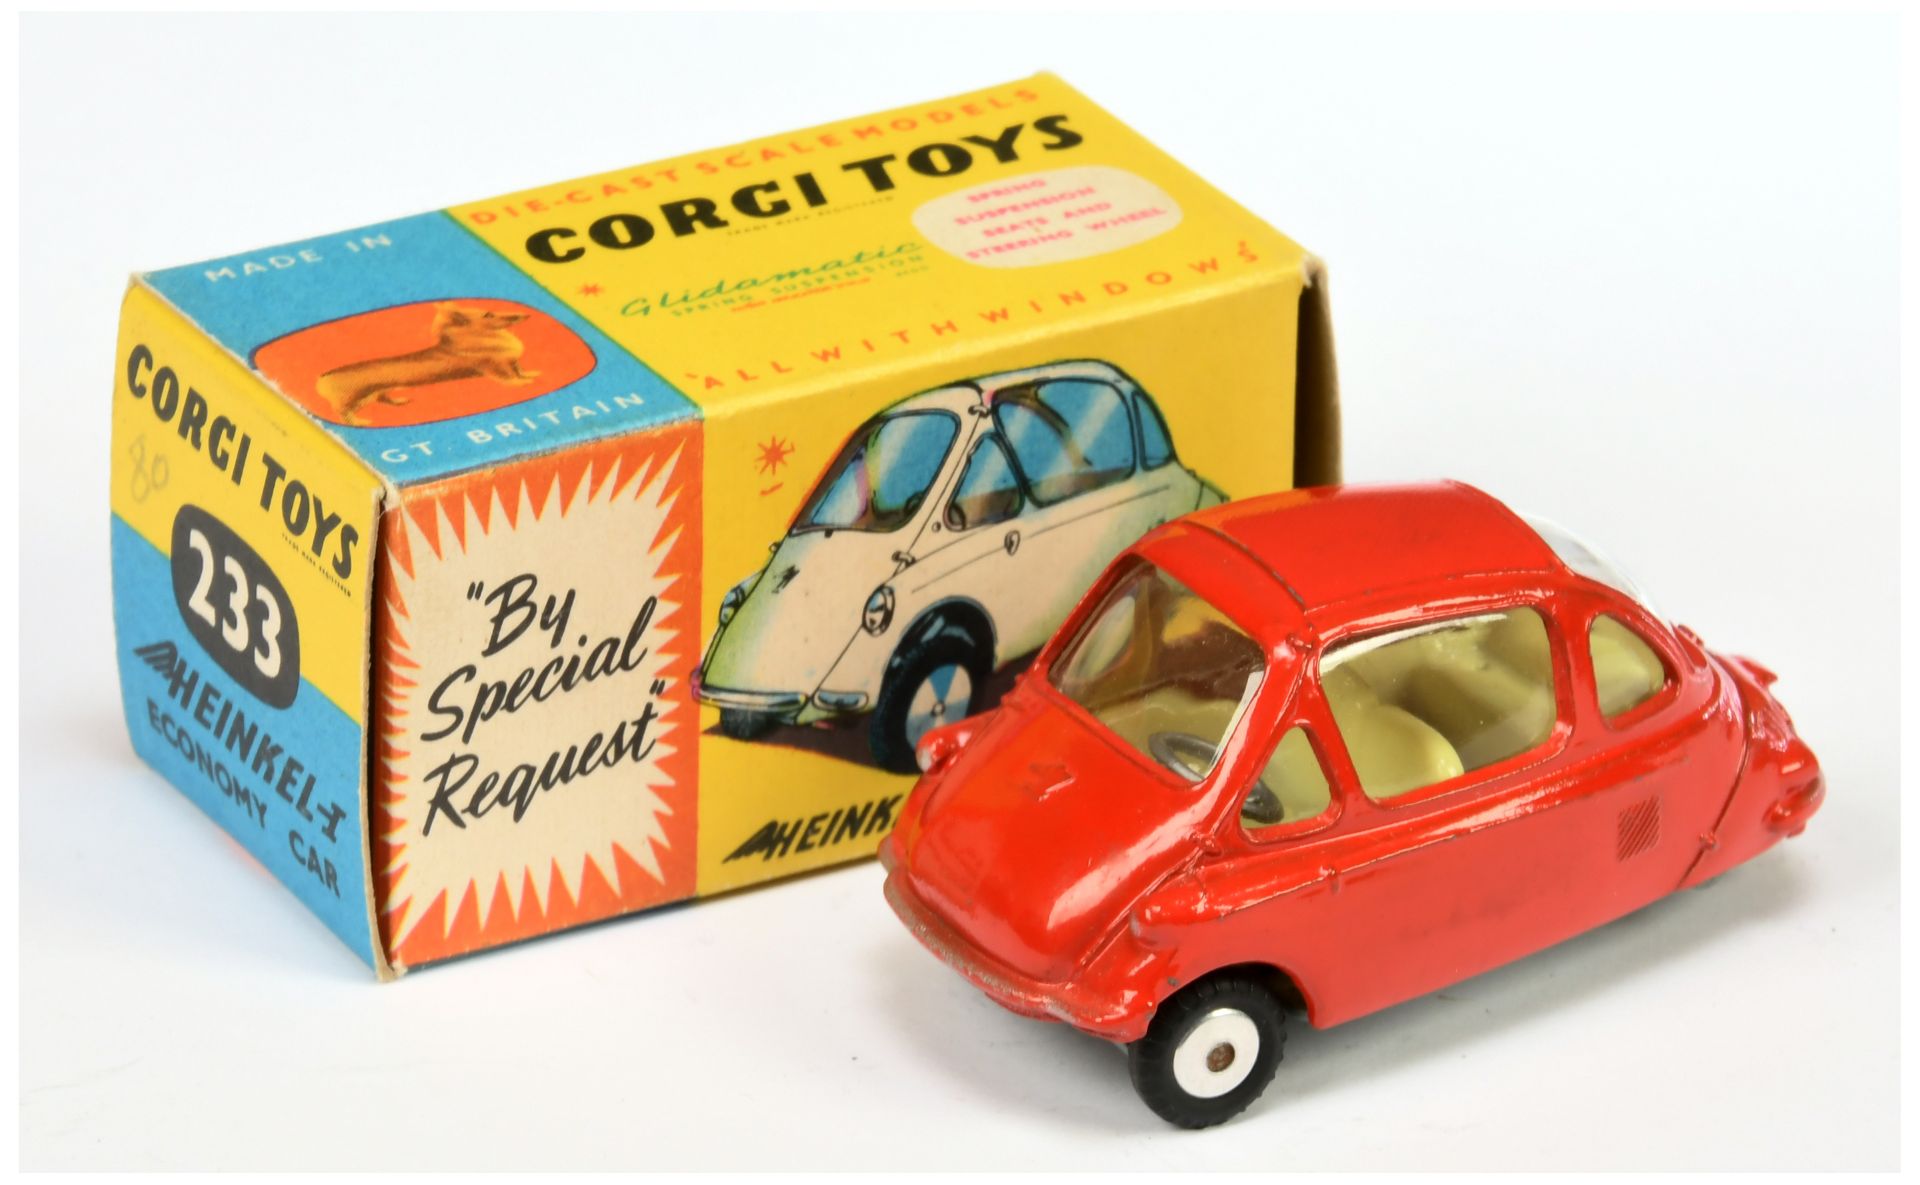 Corgi Toys 233 Heinkel Economy Car - Red Body, lemon interior, silver trim and flat spun hub